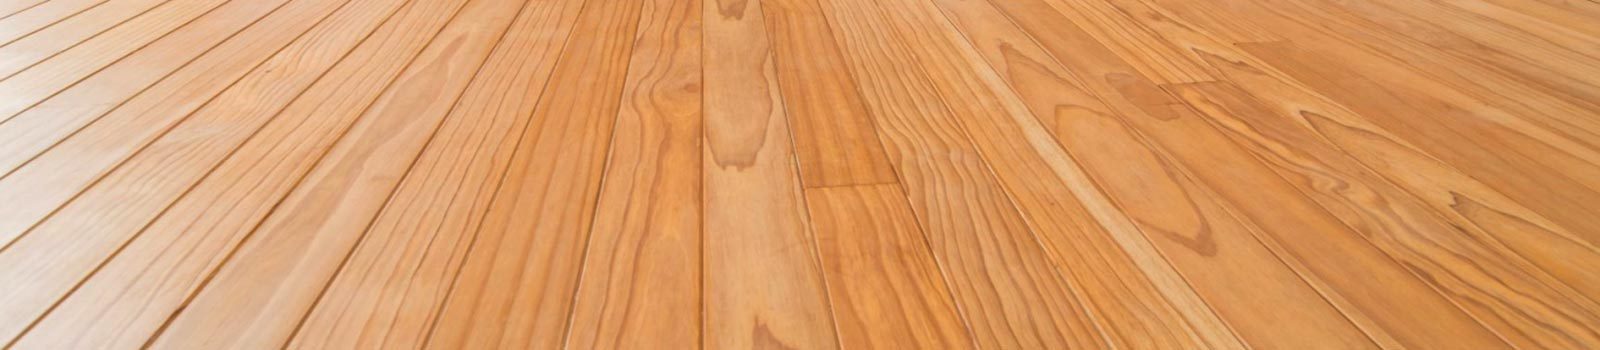 Lignia Timber flooring